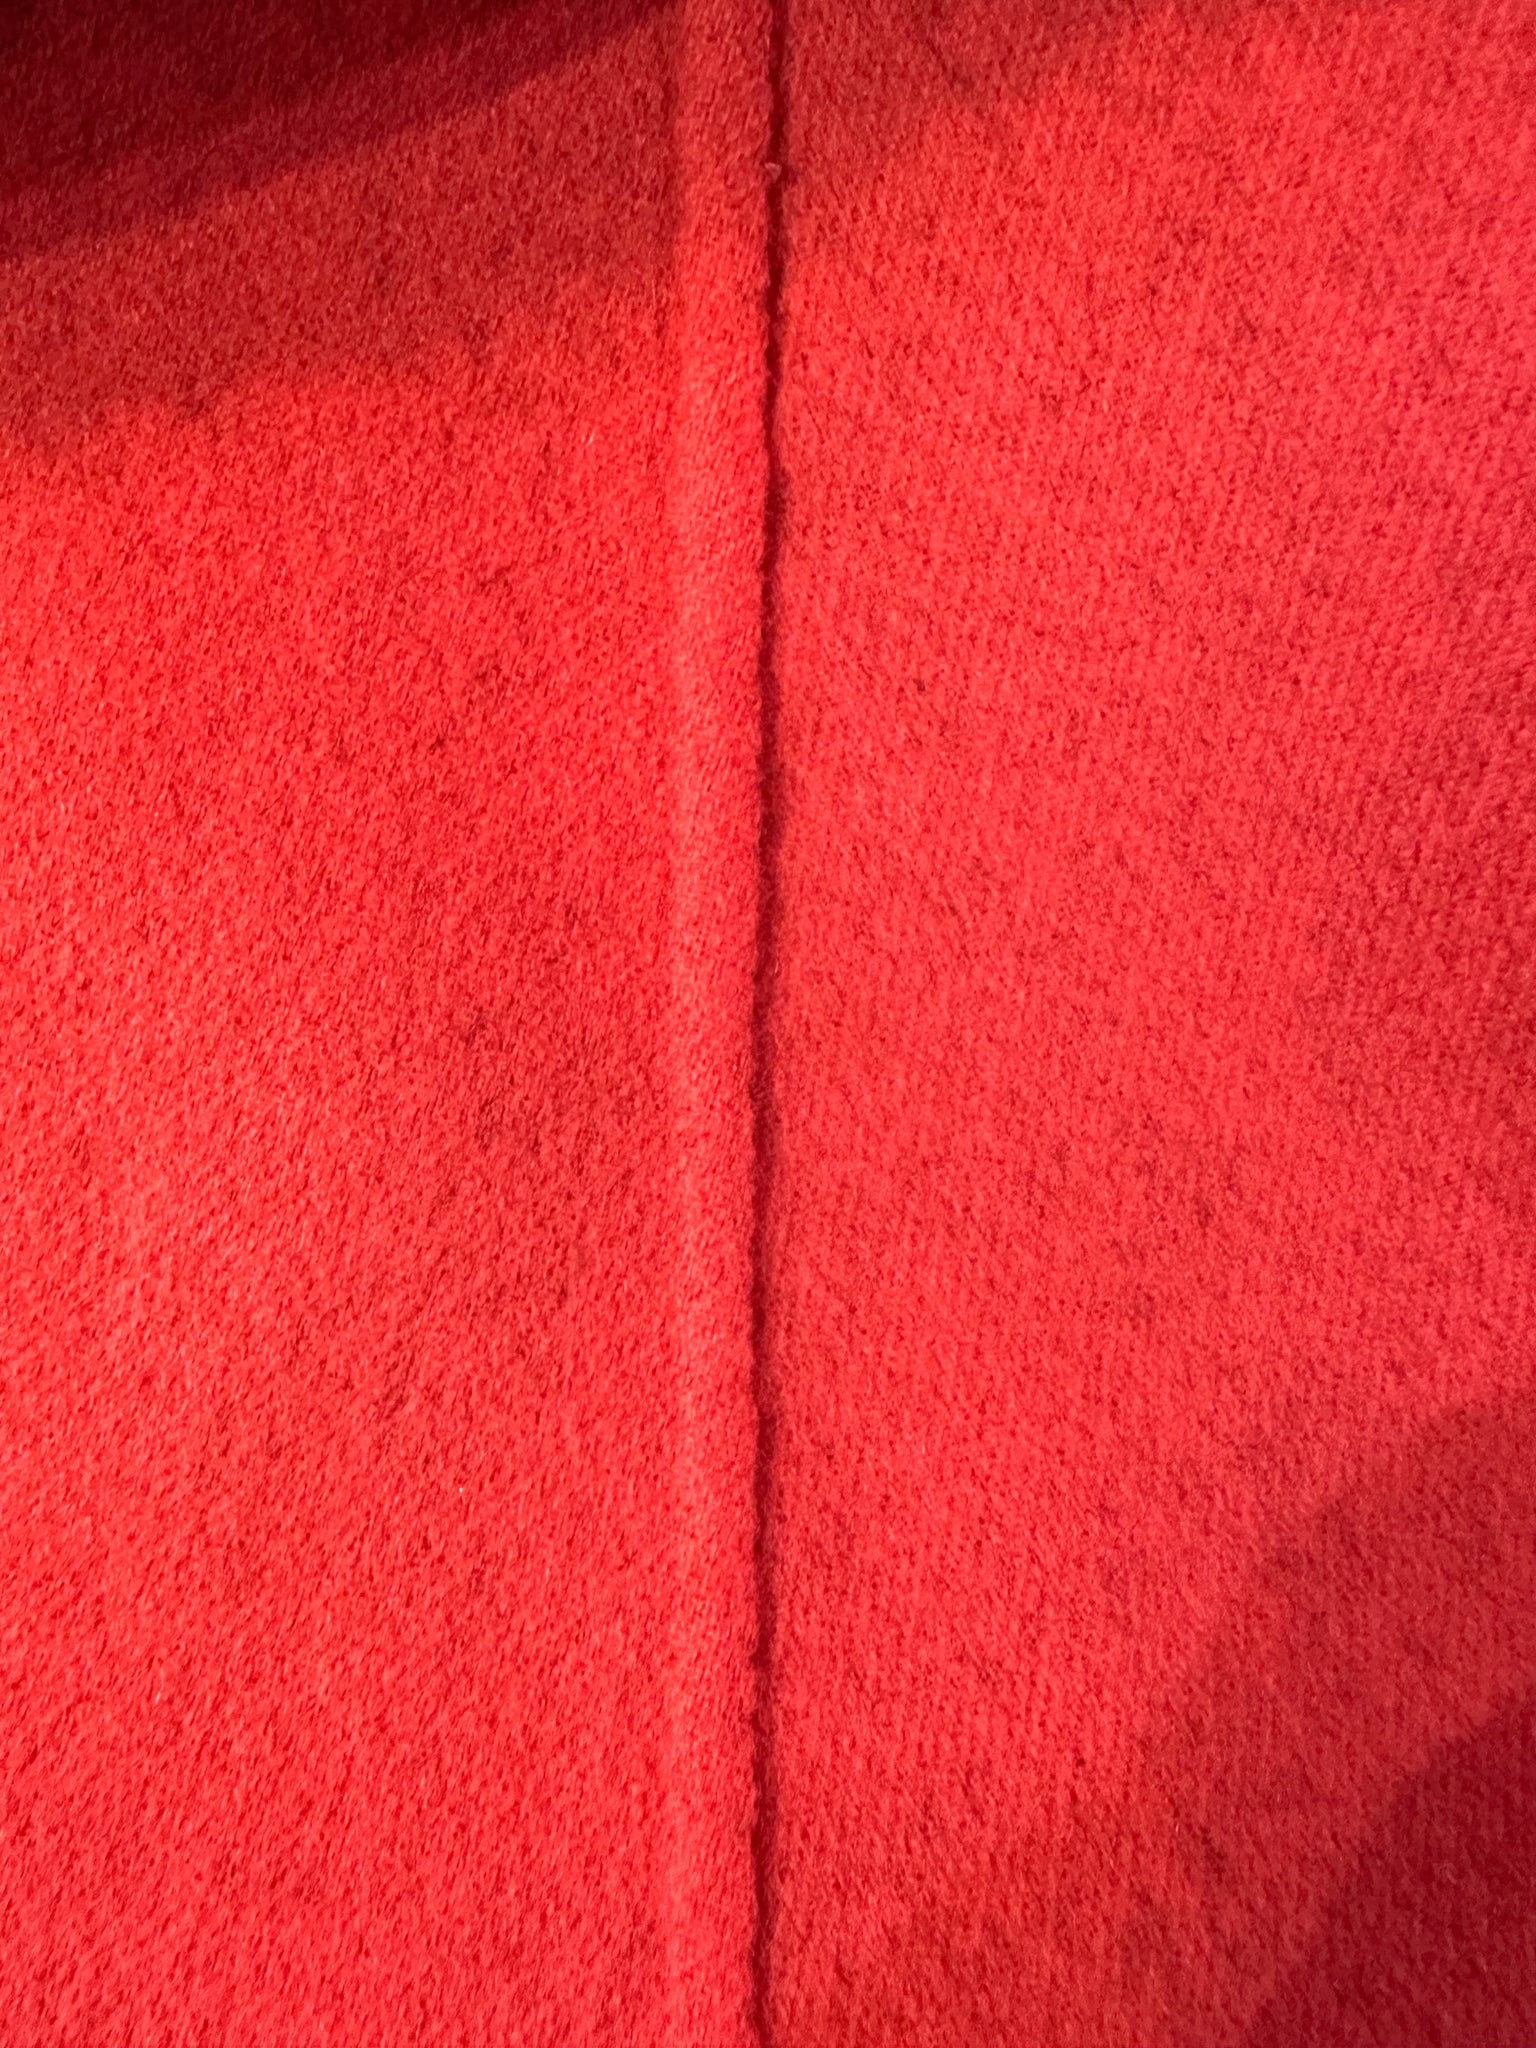  Mila Schon 90s  Wool Black & Rust Red Accented Coat  5  of 6